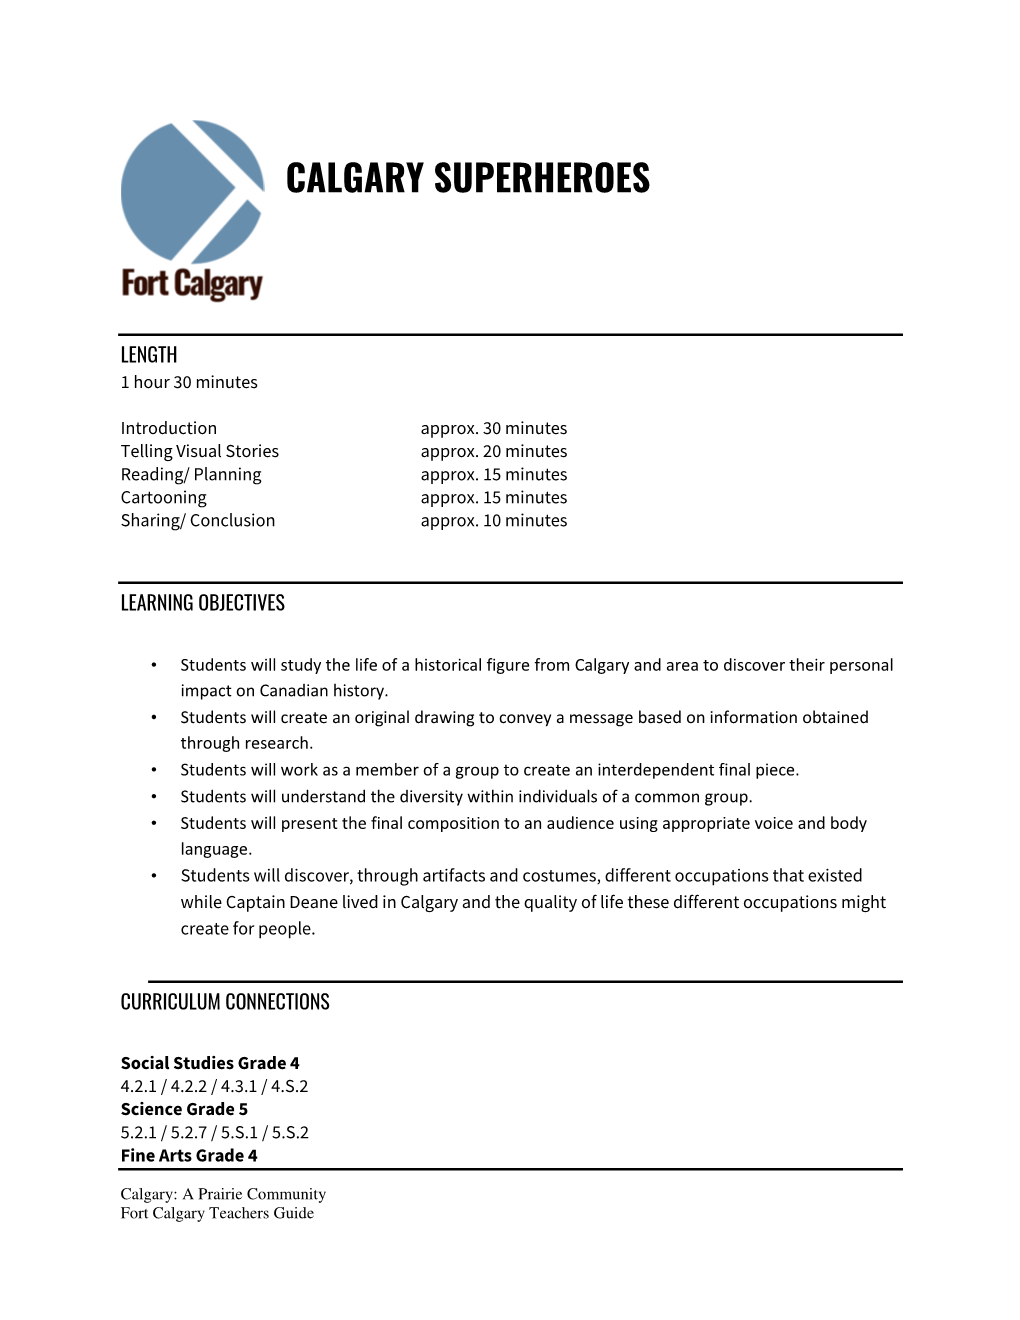 Calgary Superheroes